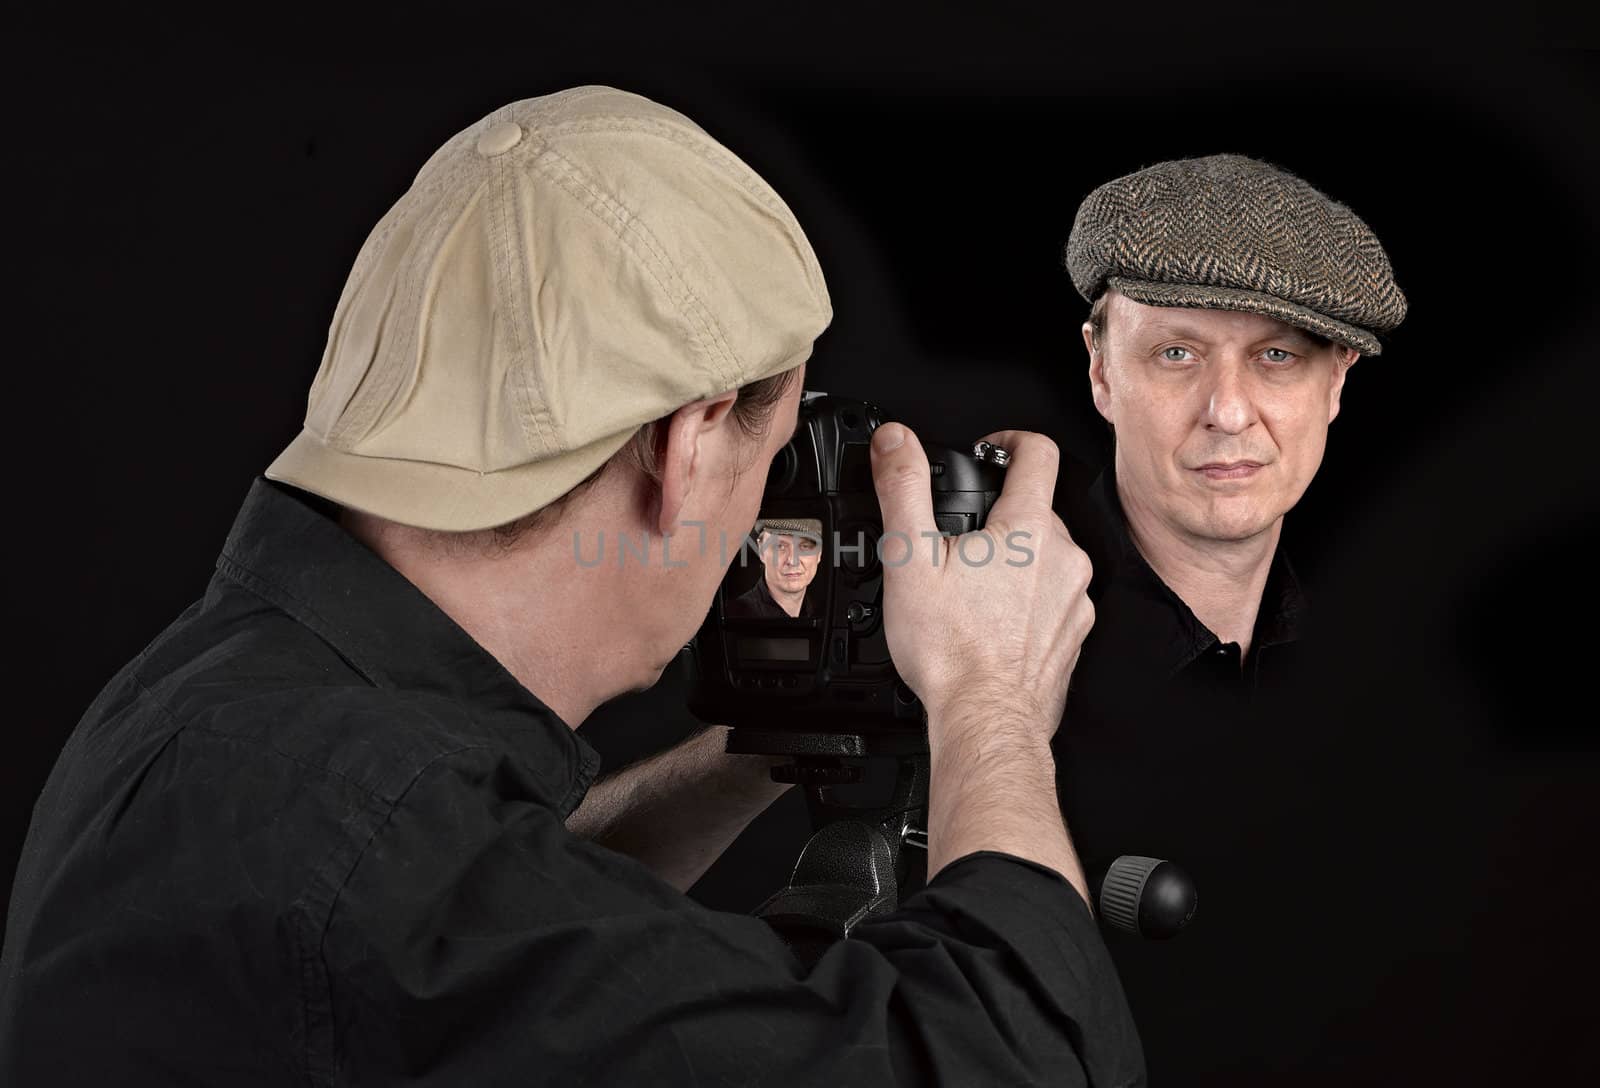 Portrait Photographer with camera by pbombaert